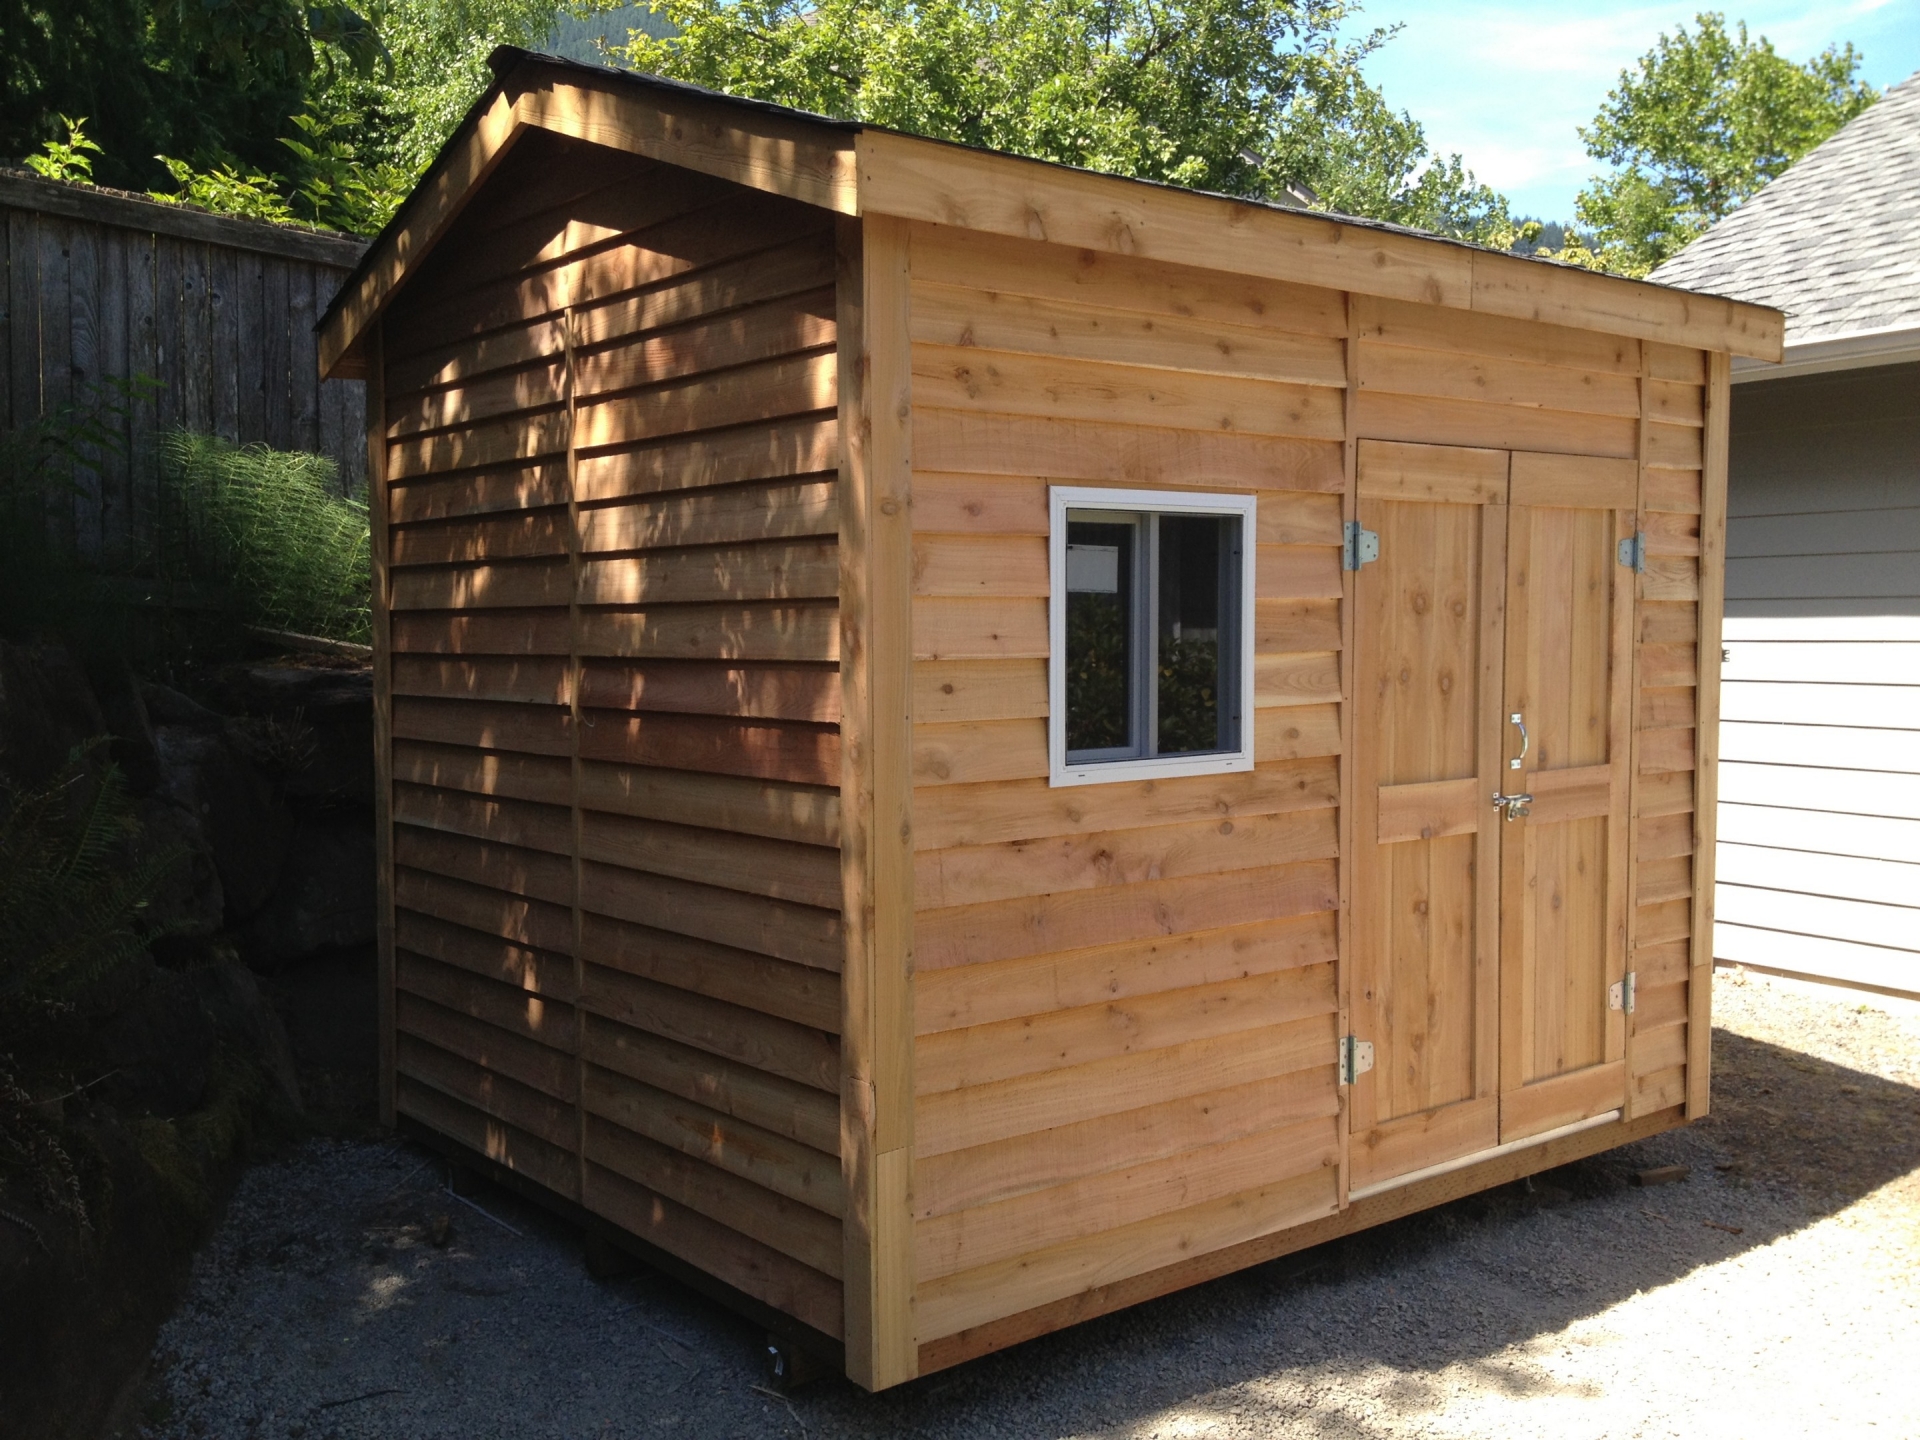 tuff shed installed start to finish, time laps - youtube